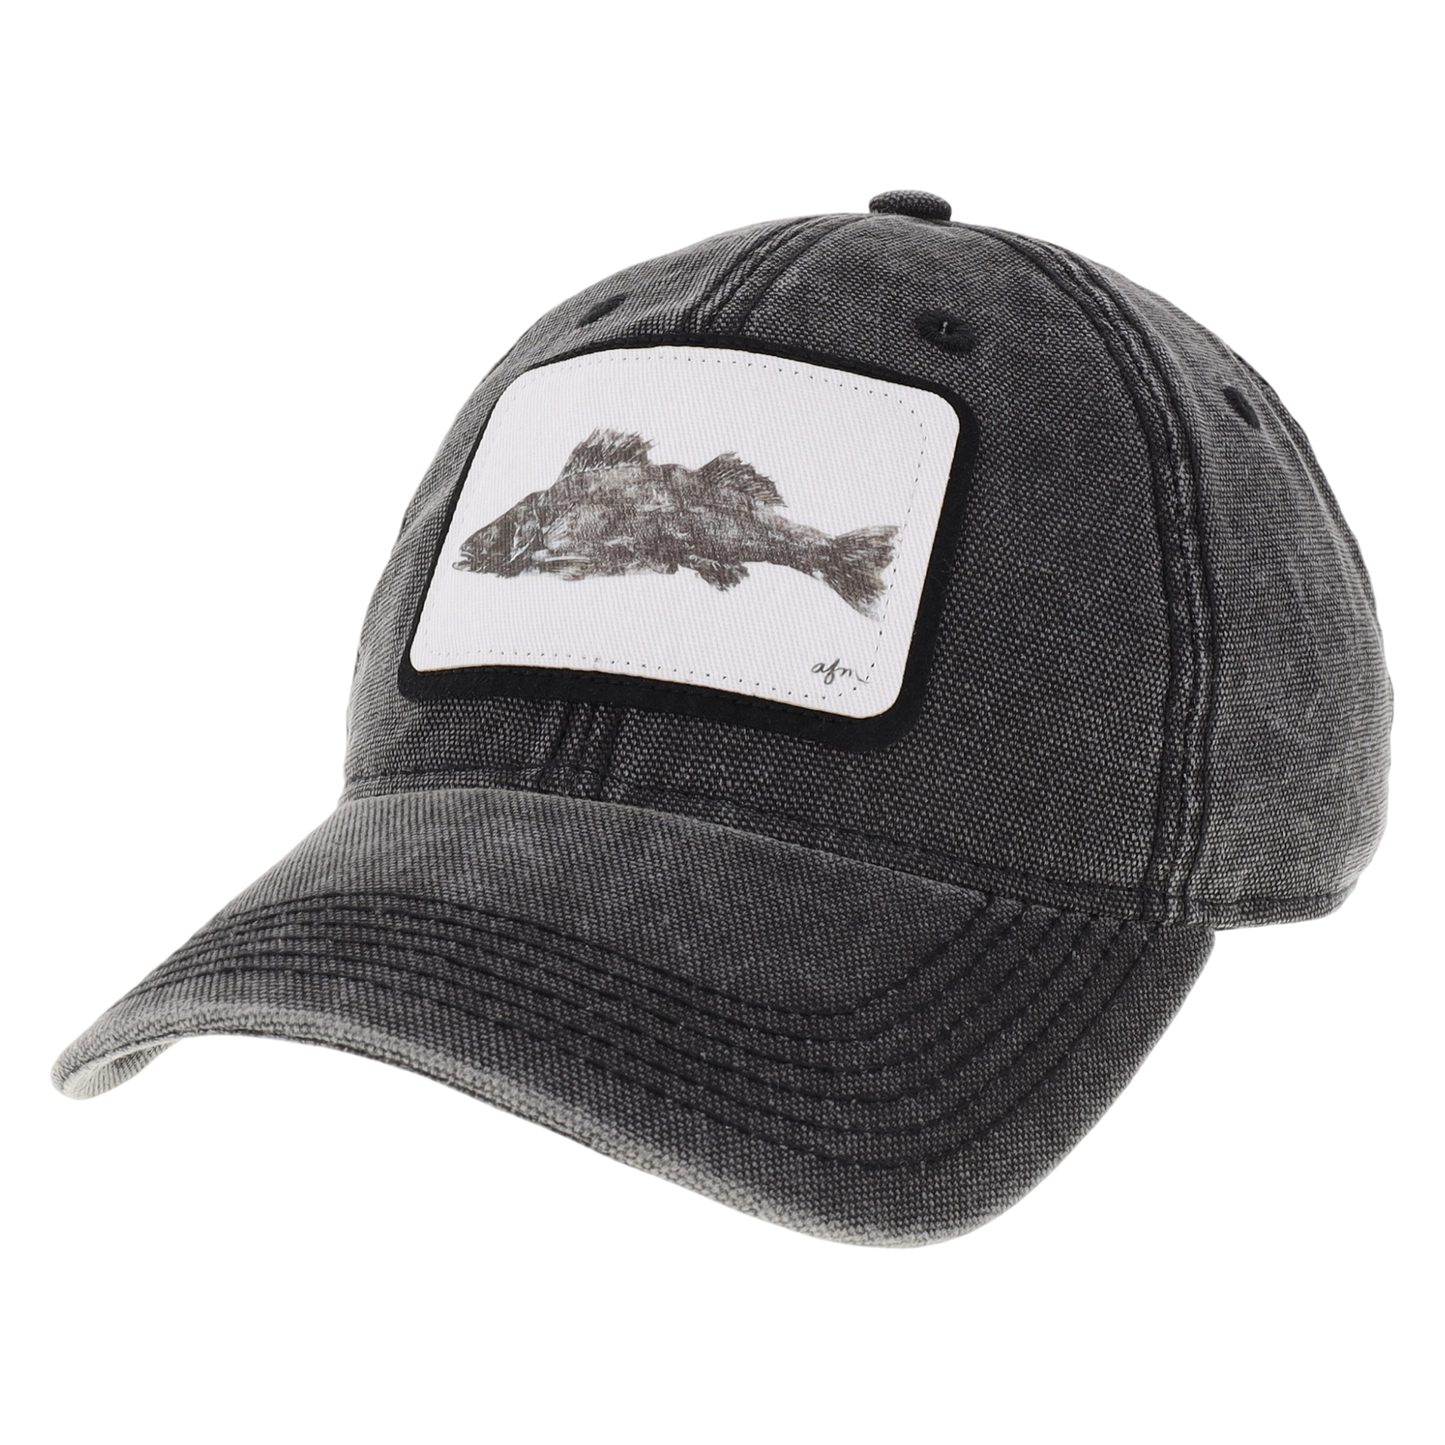 Walleye Gyotaku Dashboard Hat in Black